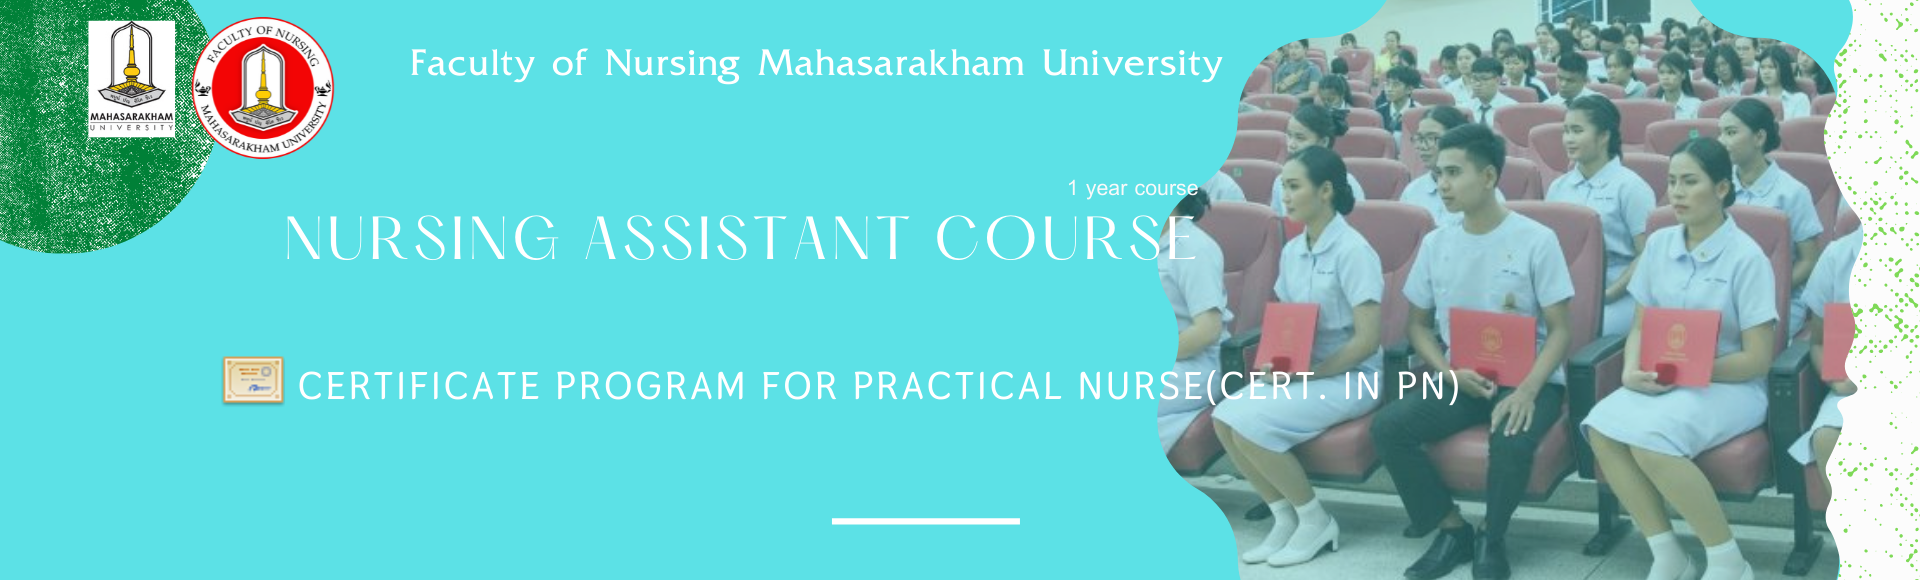 Faculty of Nursing Mahasarakham University